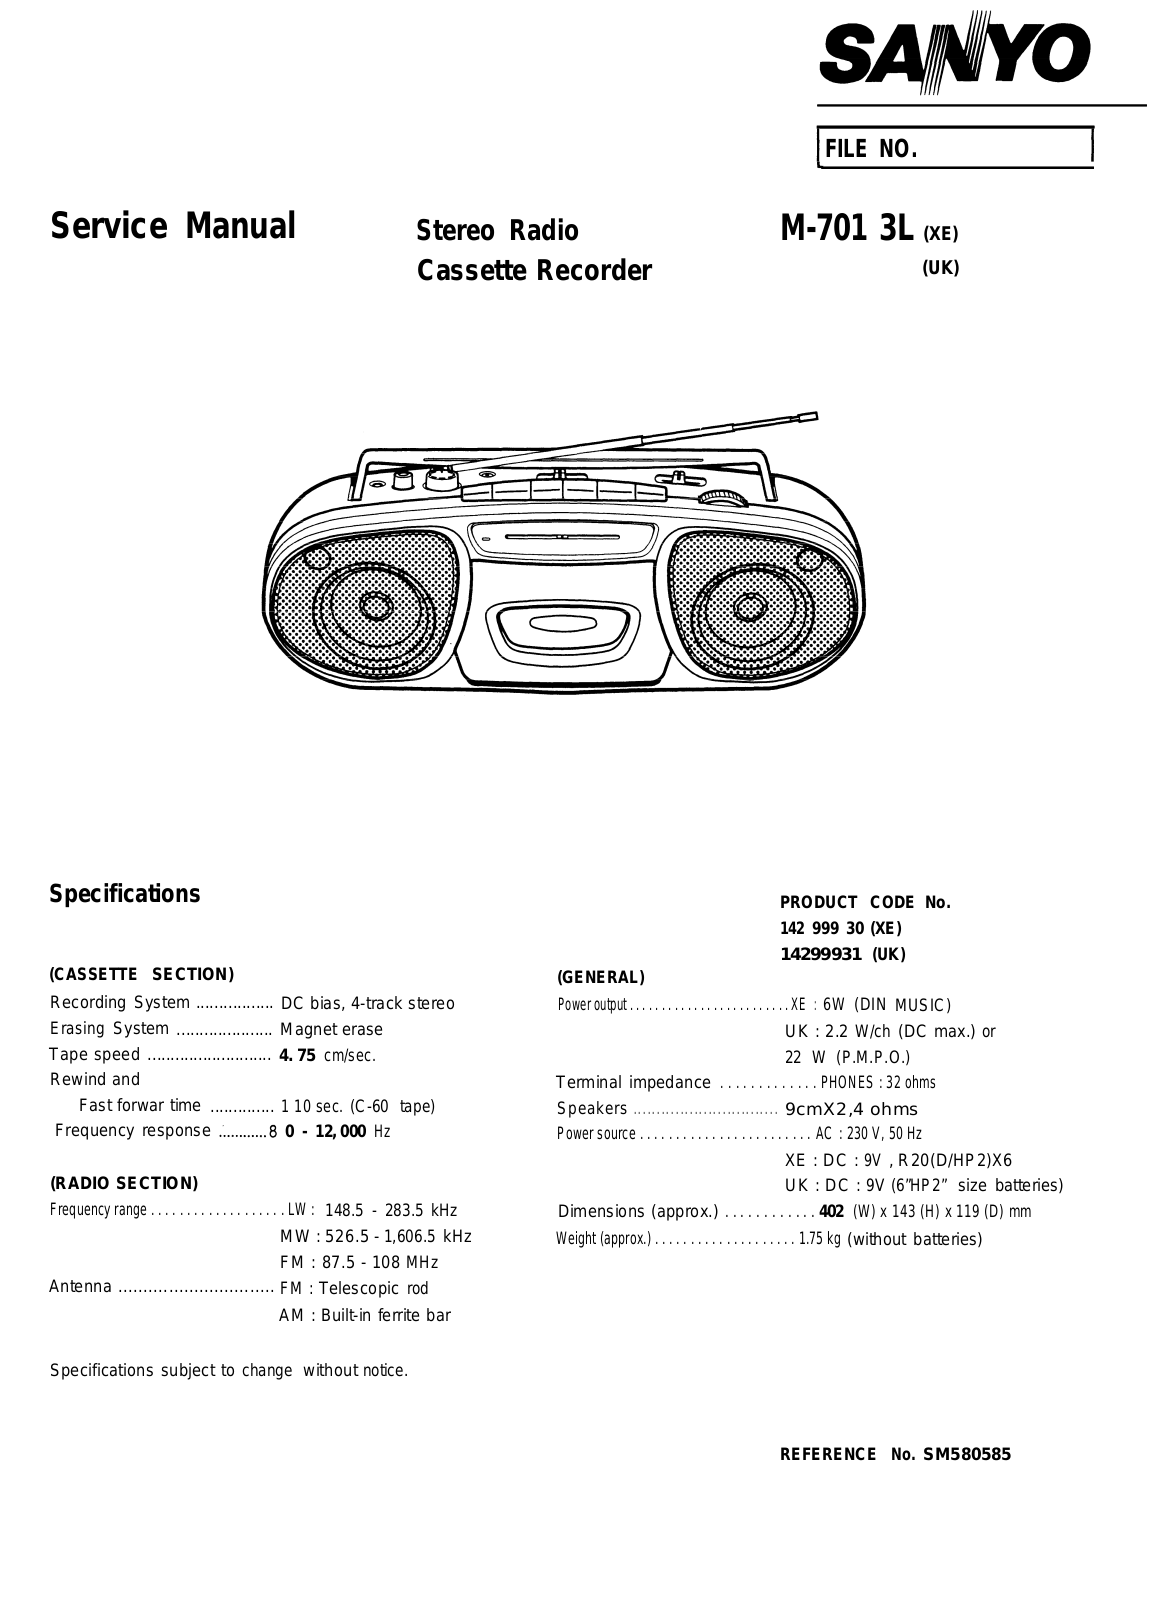 SANYO M-7013L Service Manual